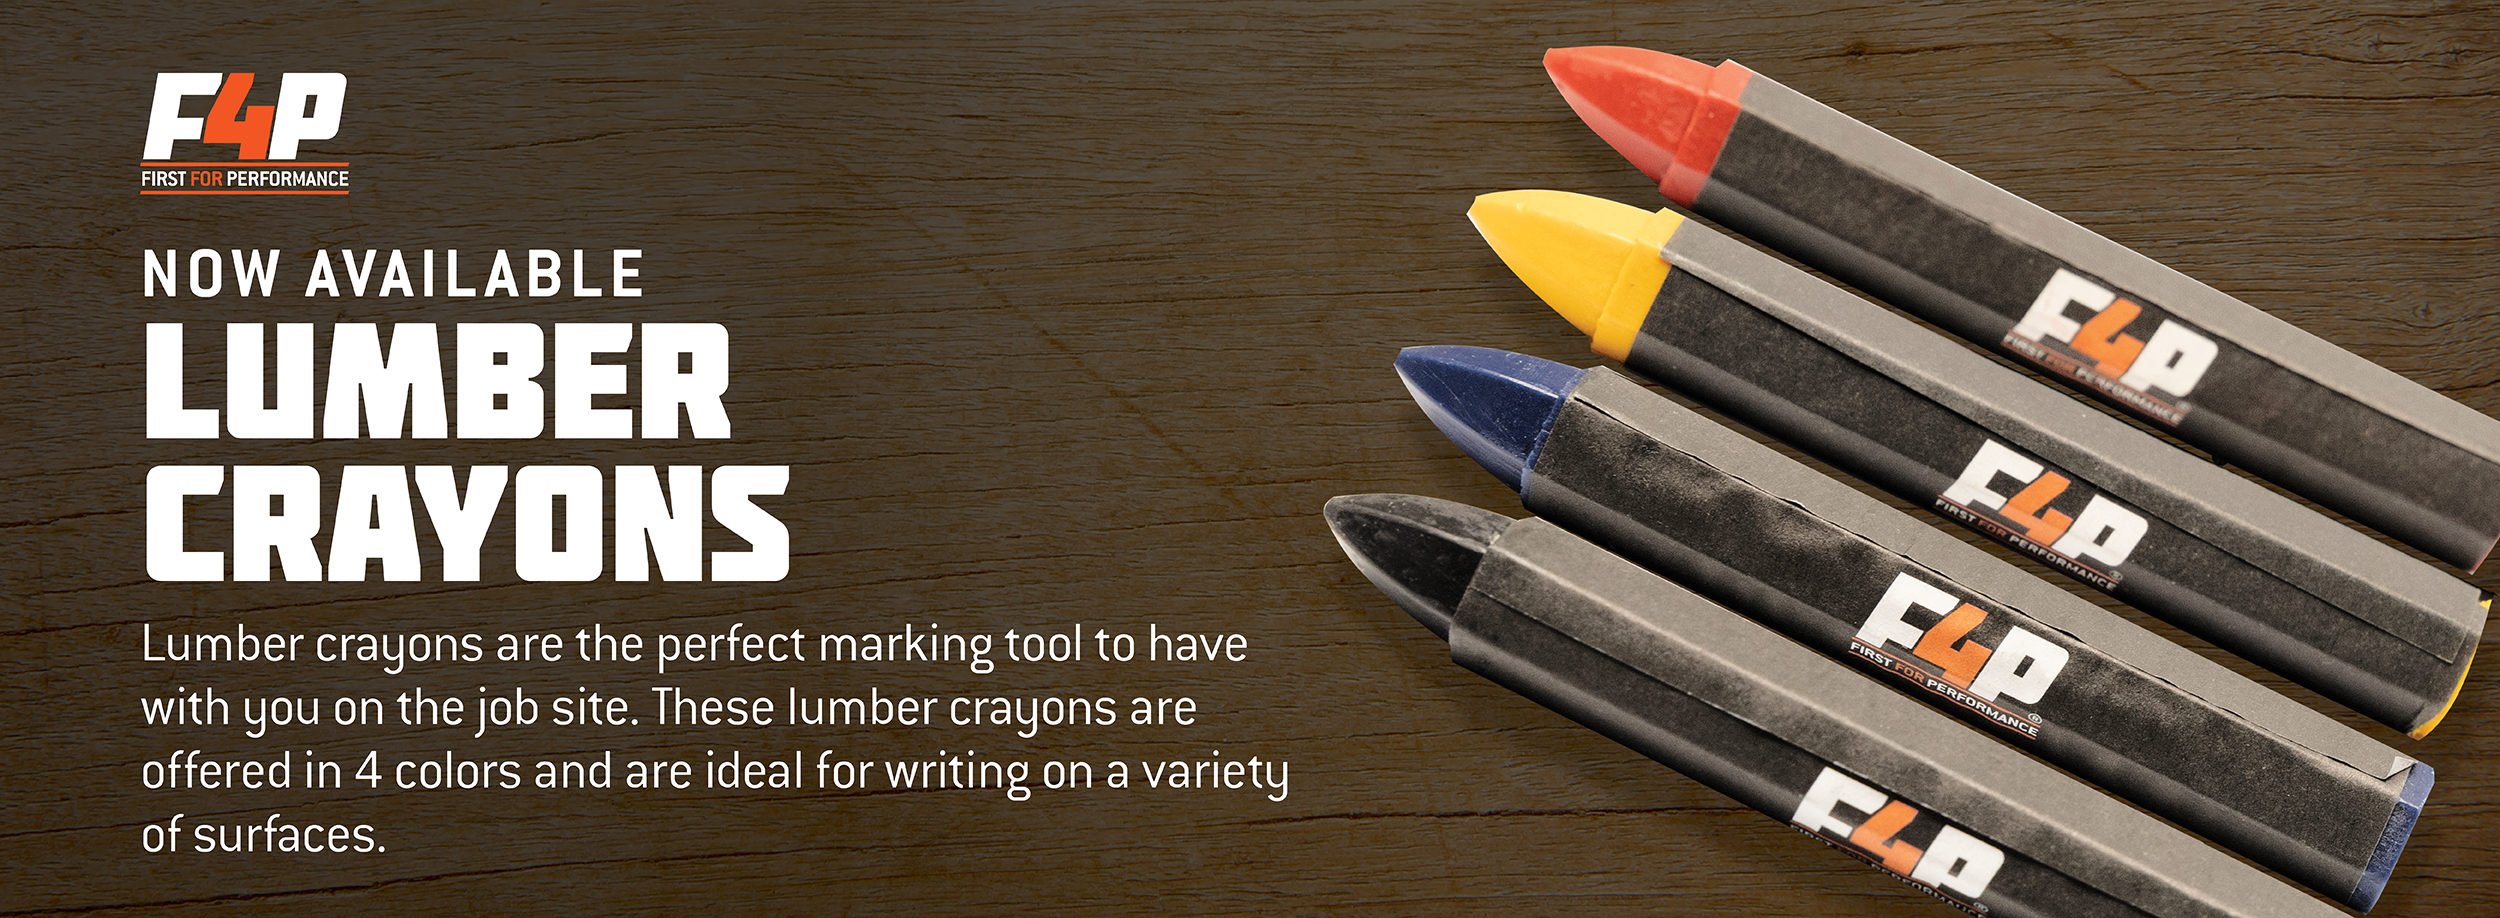 F4P Lumber Crayons